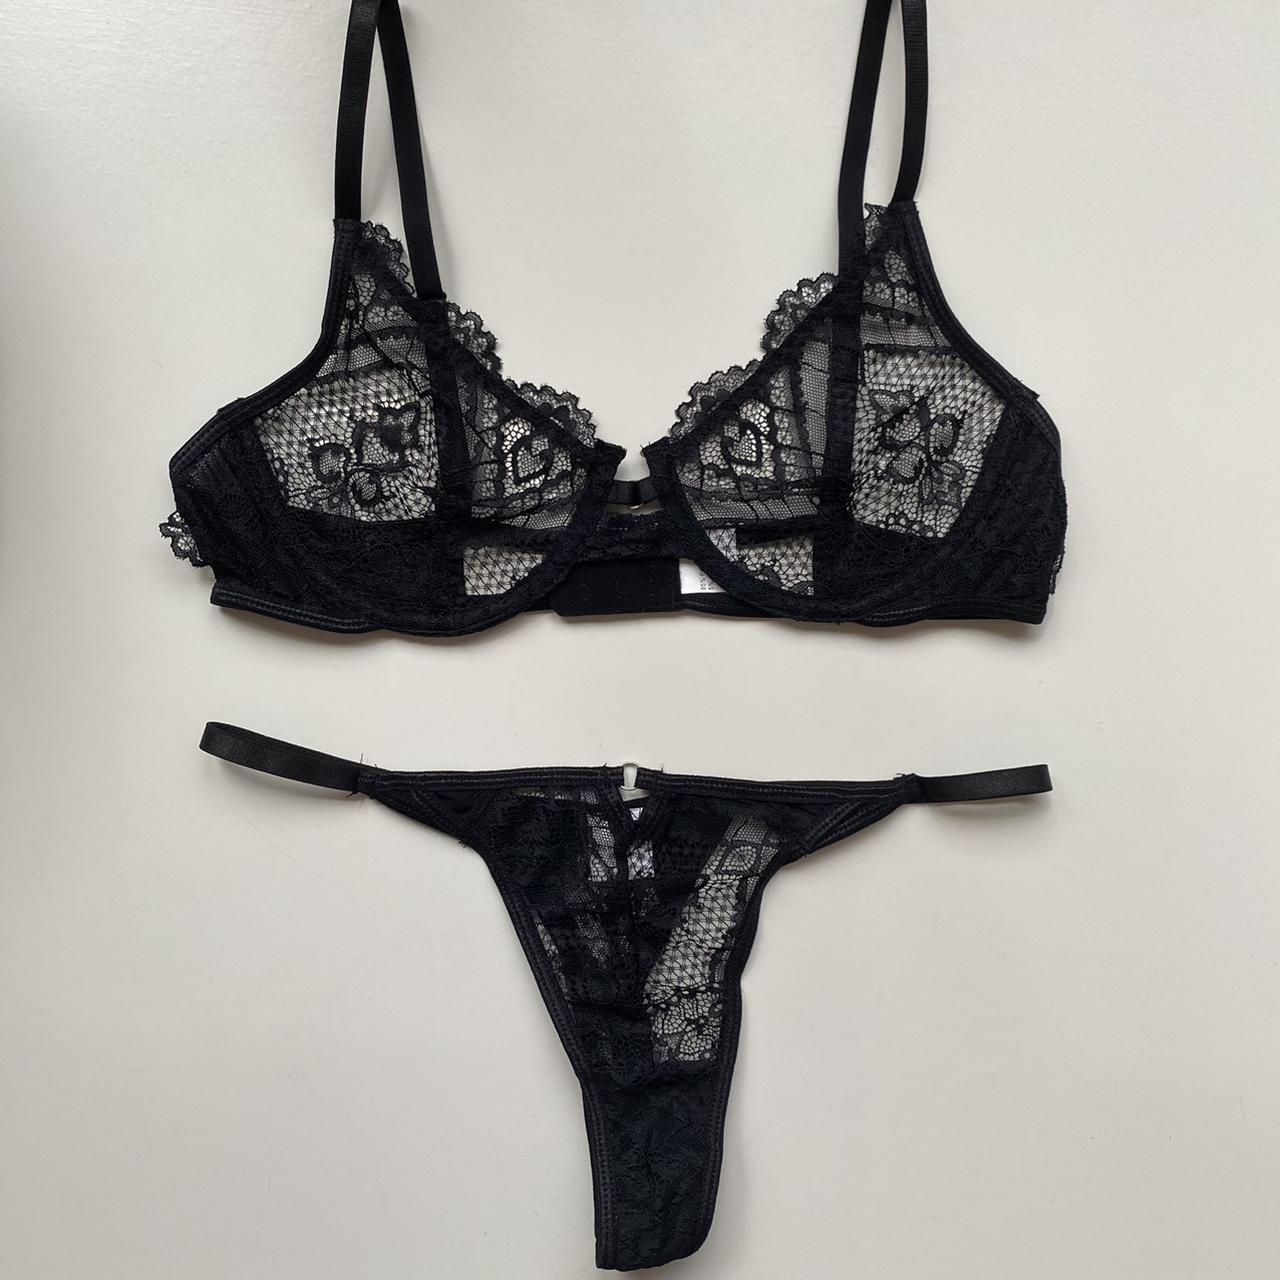 Black lace lingerie set 🖤, Similar to the Lounge